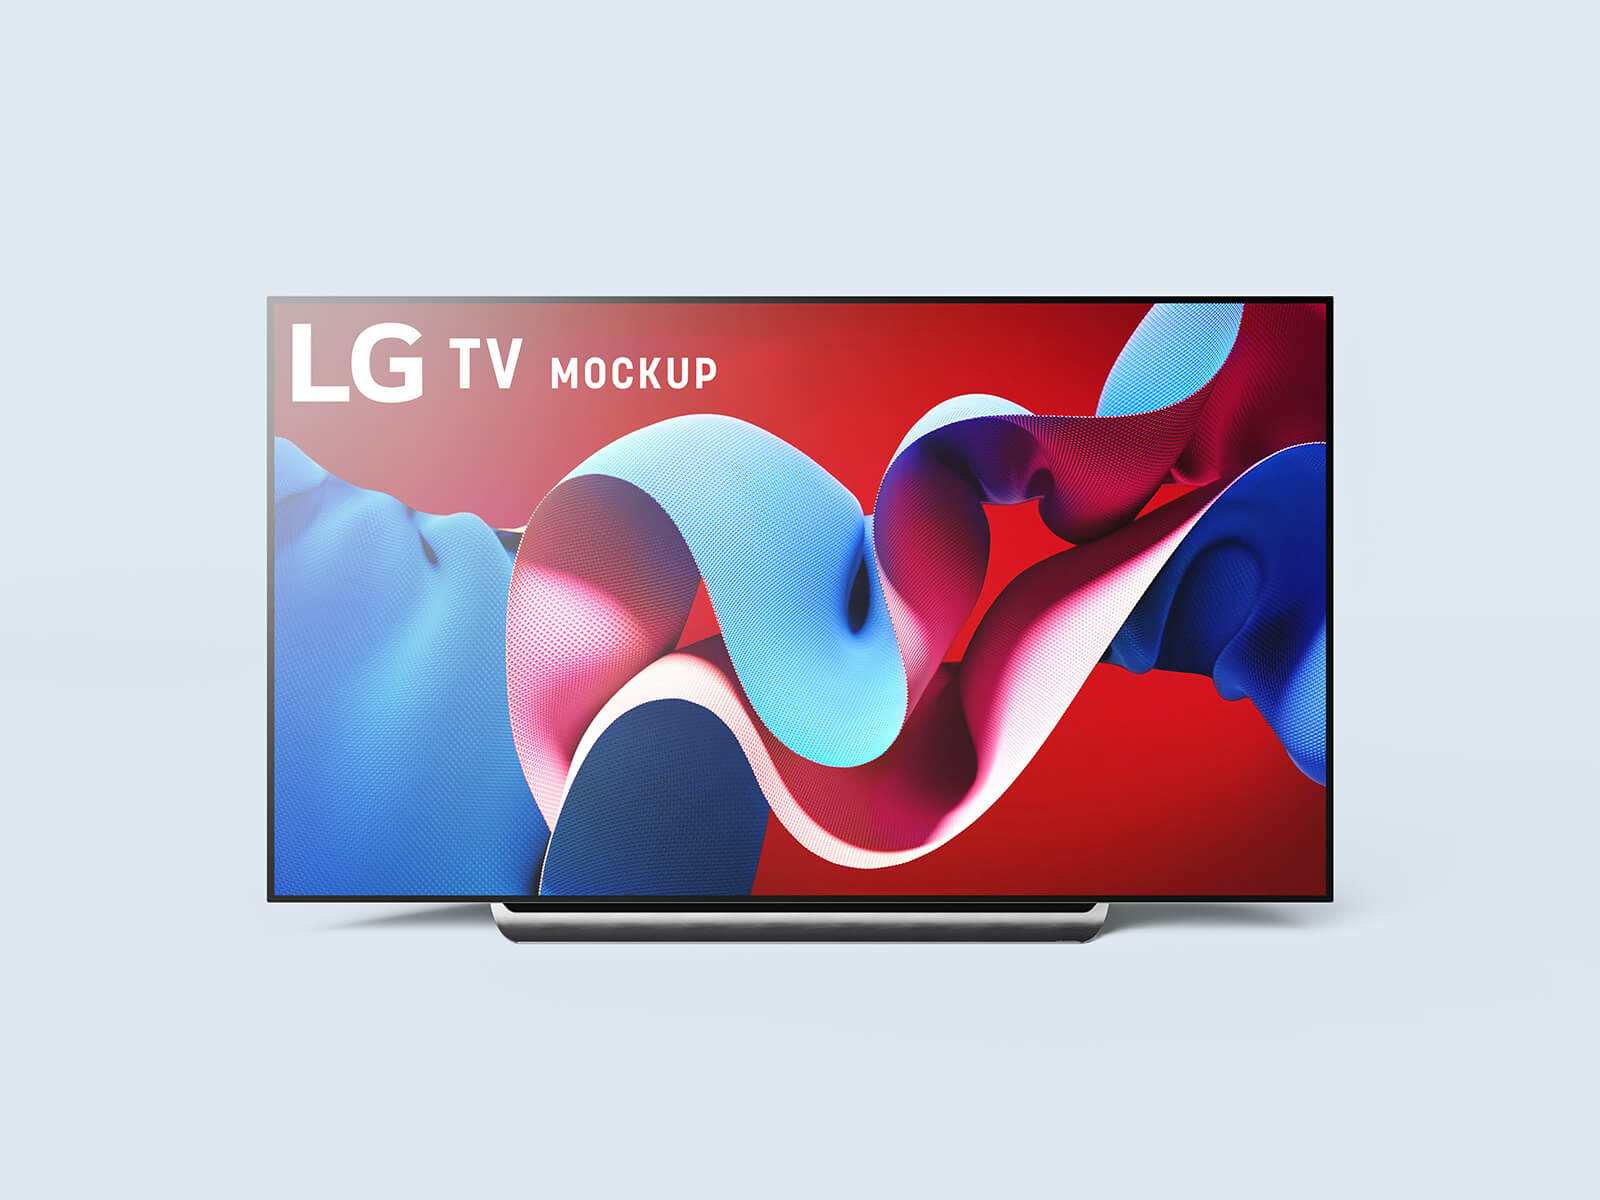 LG OLED TV MACKUP